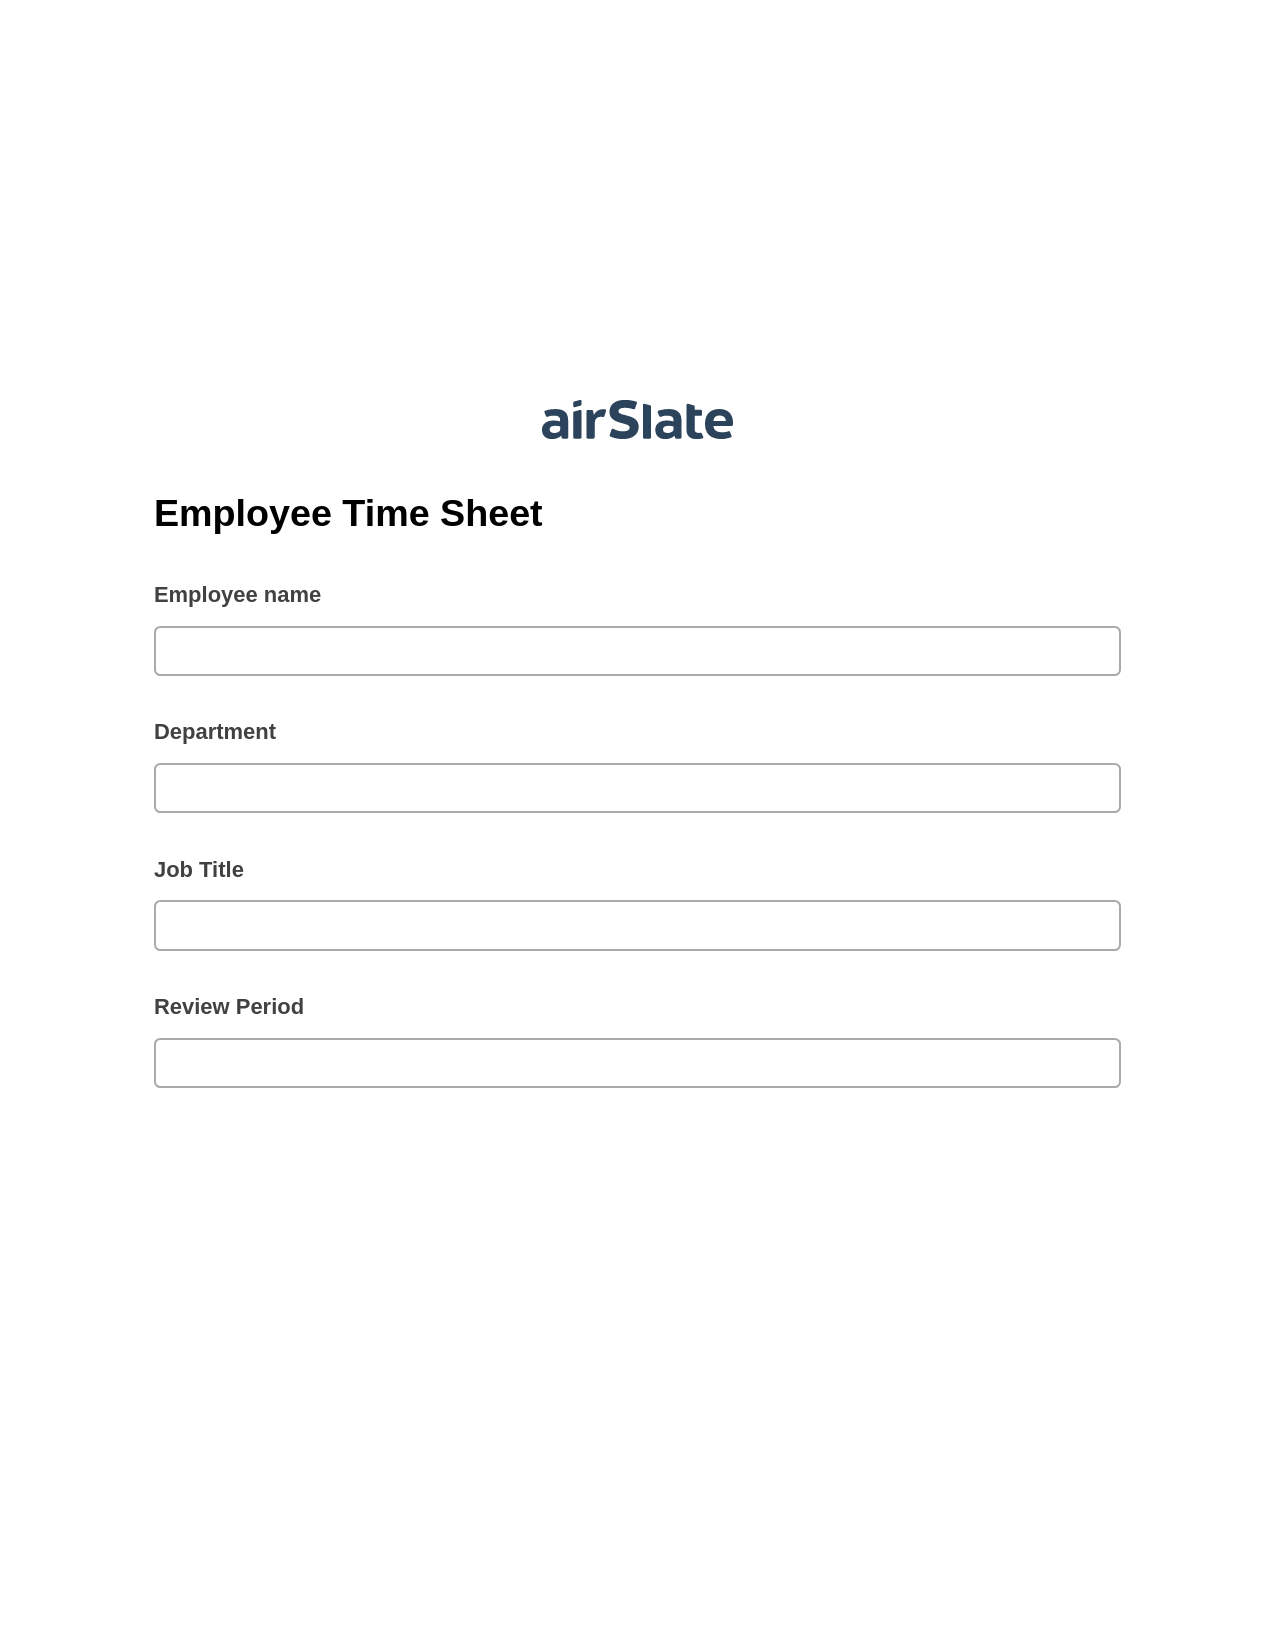 Multirole Employee Time Sheet Pre-fill from another Slate Bot, Update MS Dynamics 365 Record Bot, Slack Notification Postfinish Bot